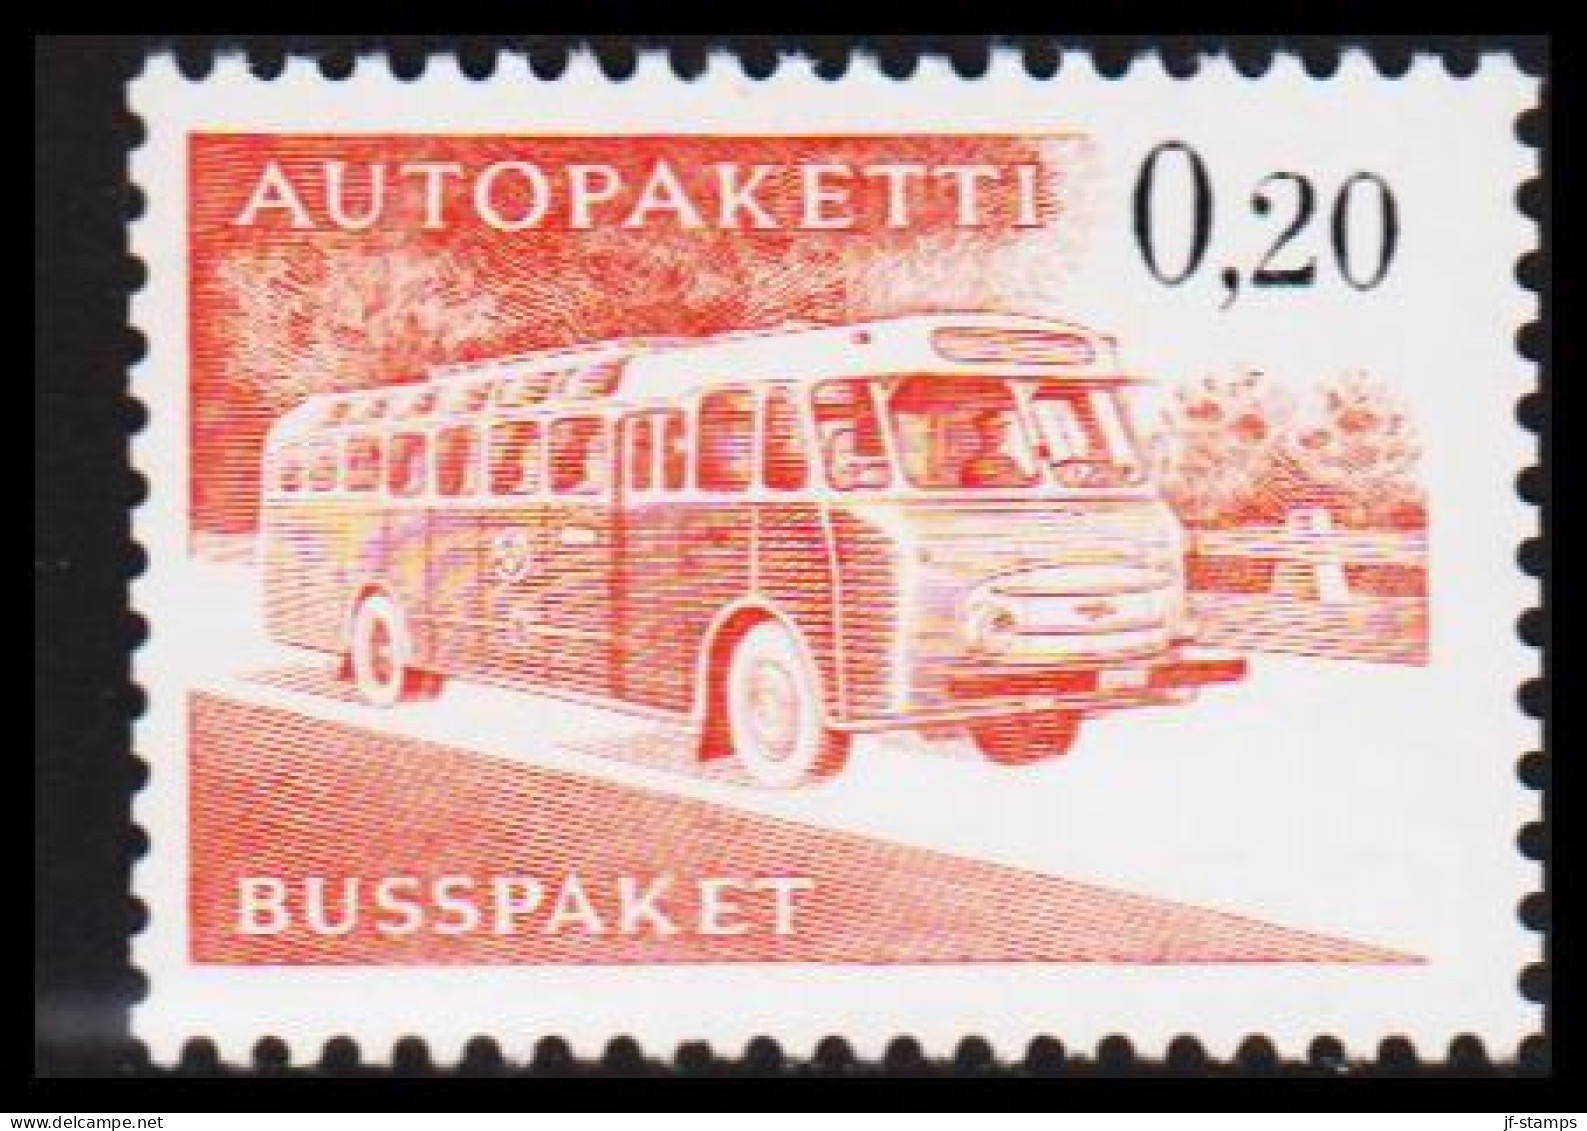 1963-1980. FINLAND. Mail Bus. 0,20 Mk. AUTOPAKETTI - BUSSPAKET Never Hinged. Lumogen. Yell... (Michel AP 11y) - JF535628 - Colis Par Autobus